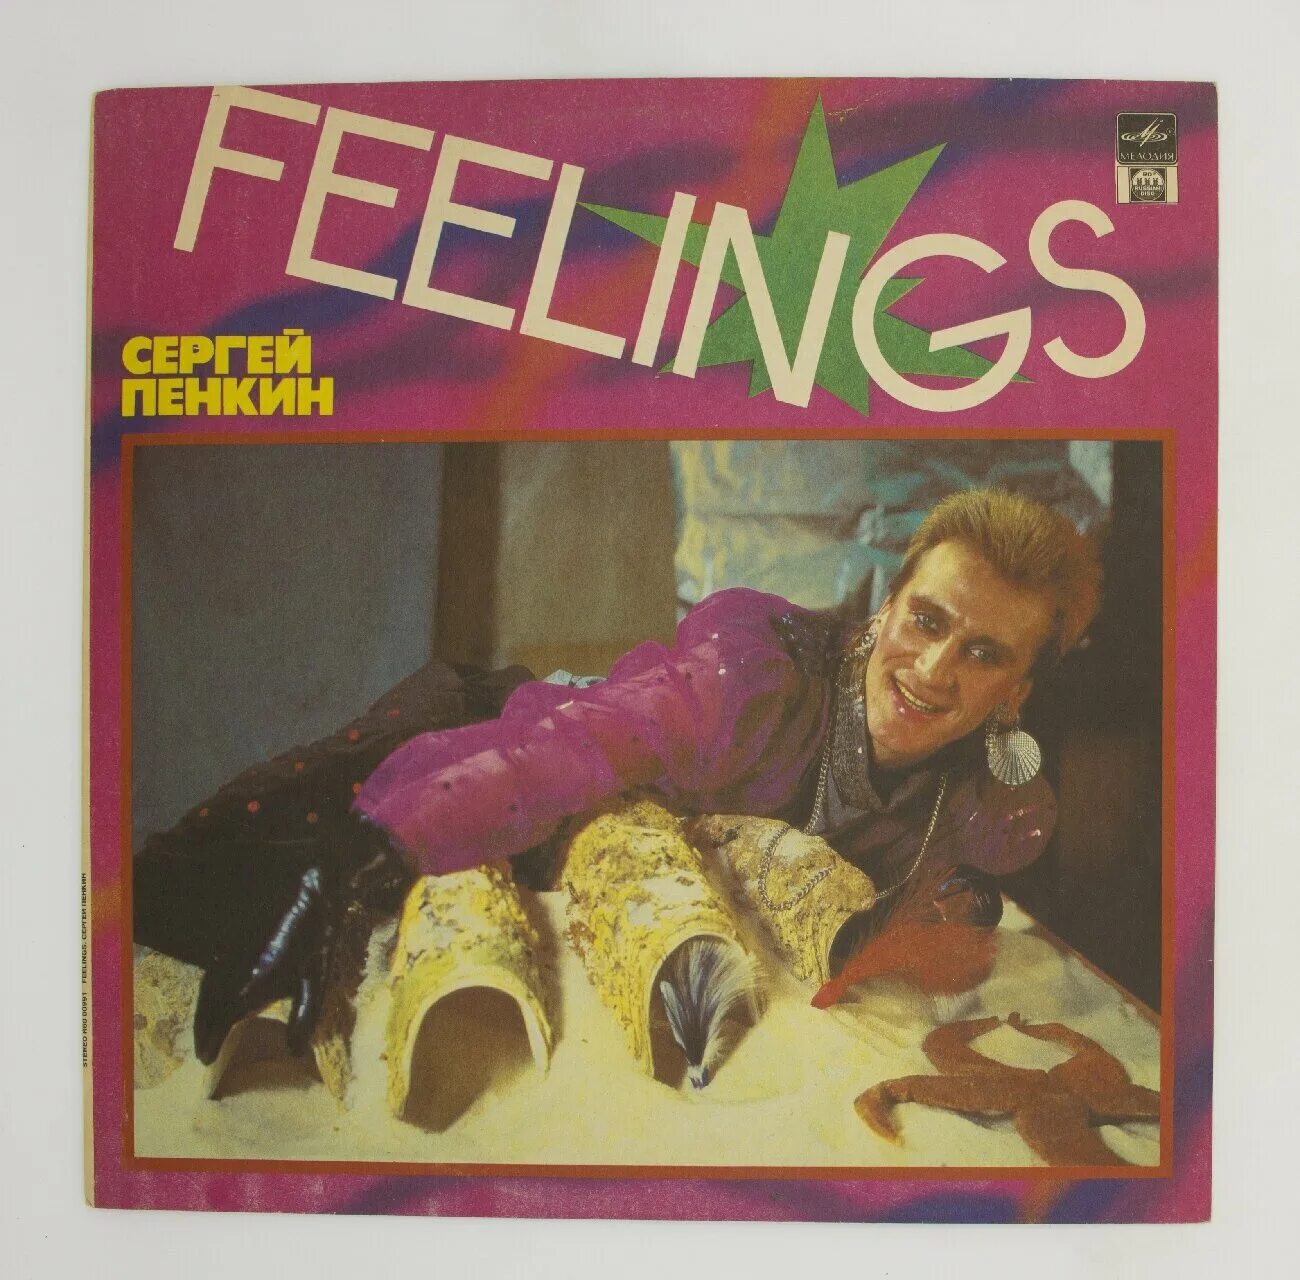 Пенкин feelings. Филингс Пенкин альбом.